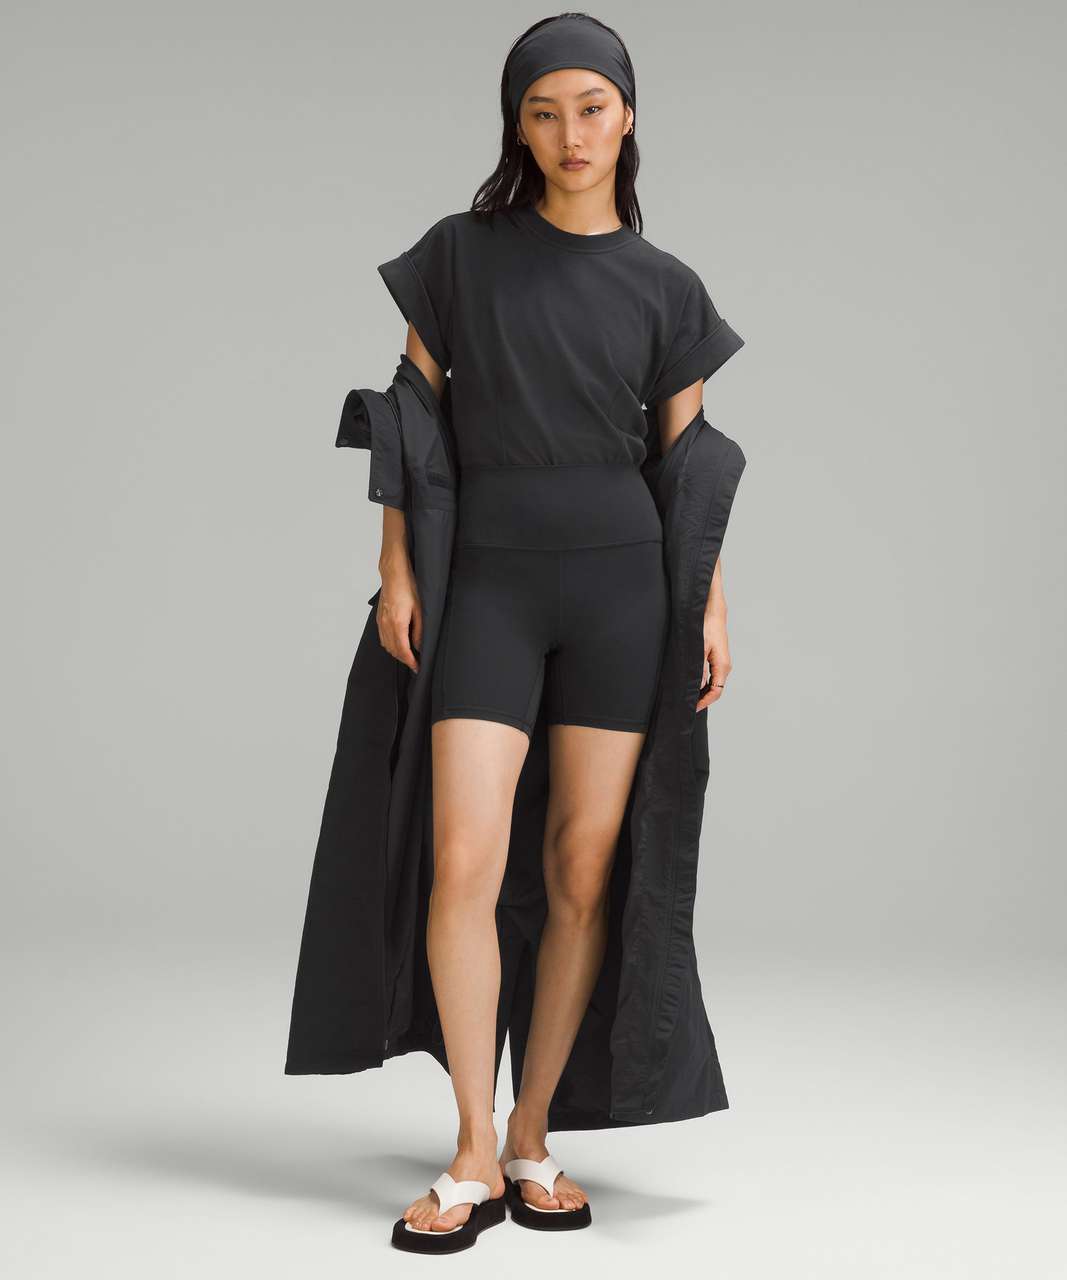 NWOT - Lululemon Reveal Bodysuit *Mindful Motion Black, SIZE: 4